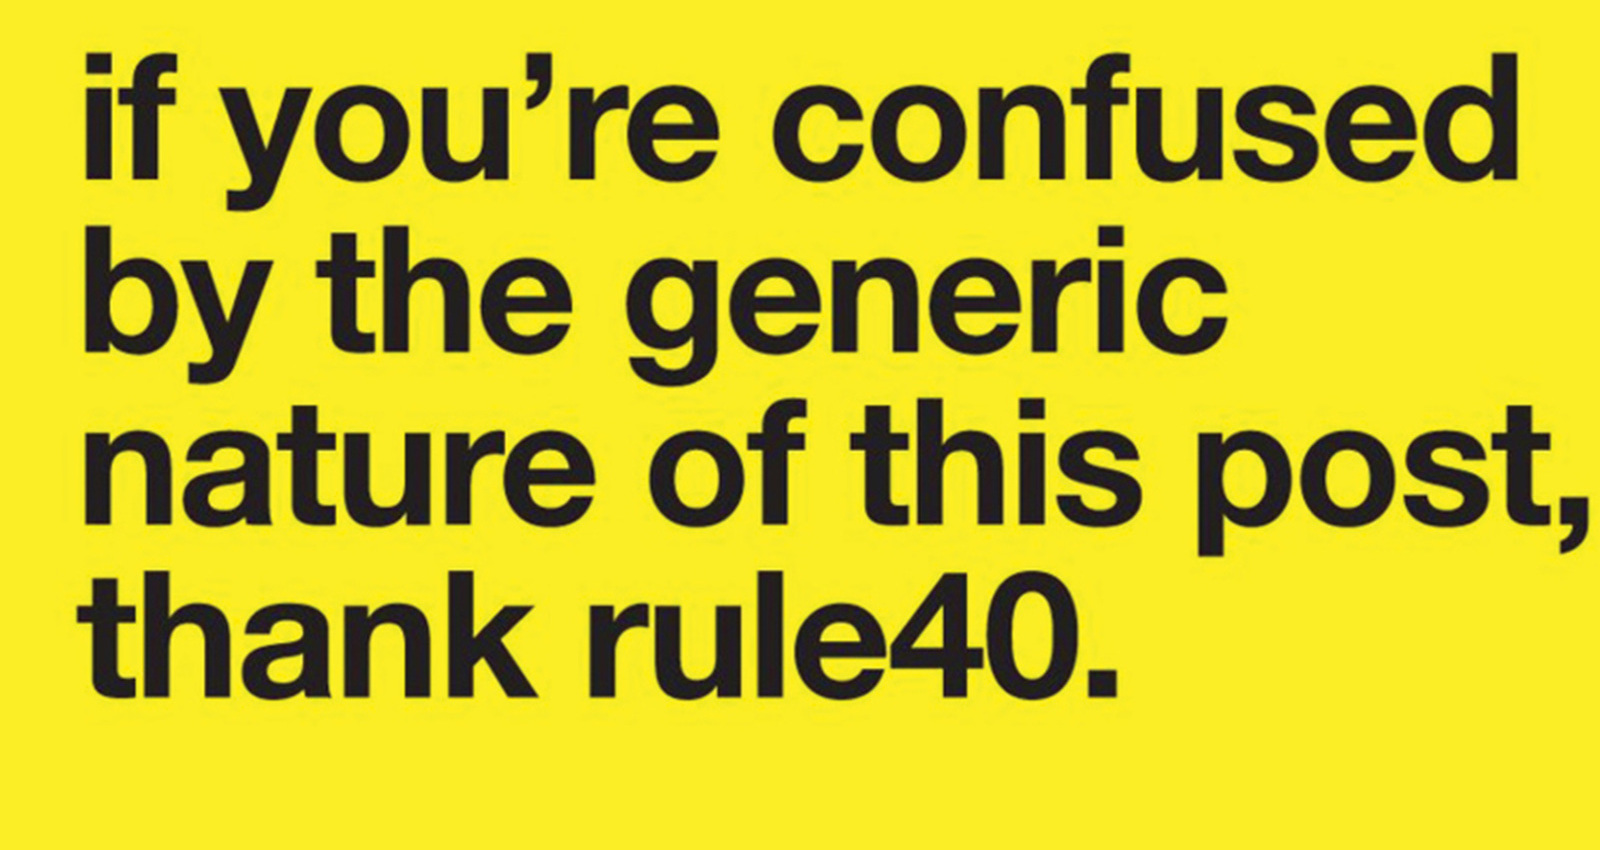 Rule40